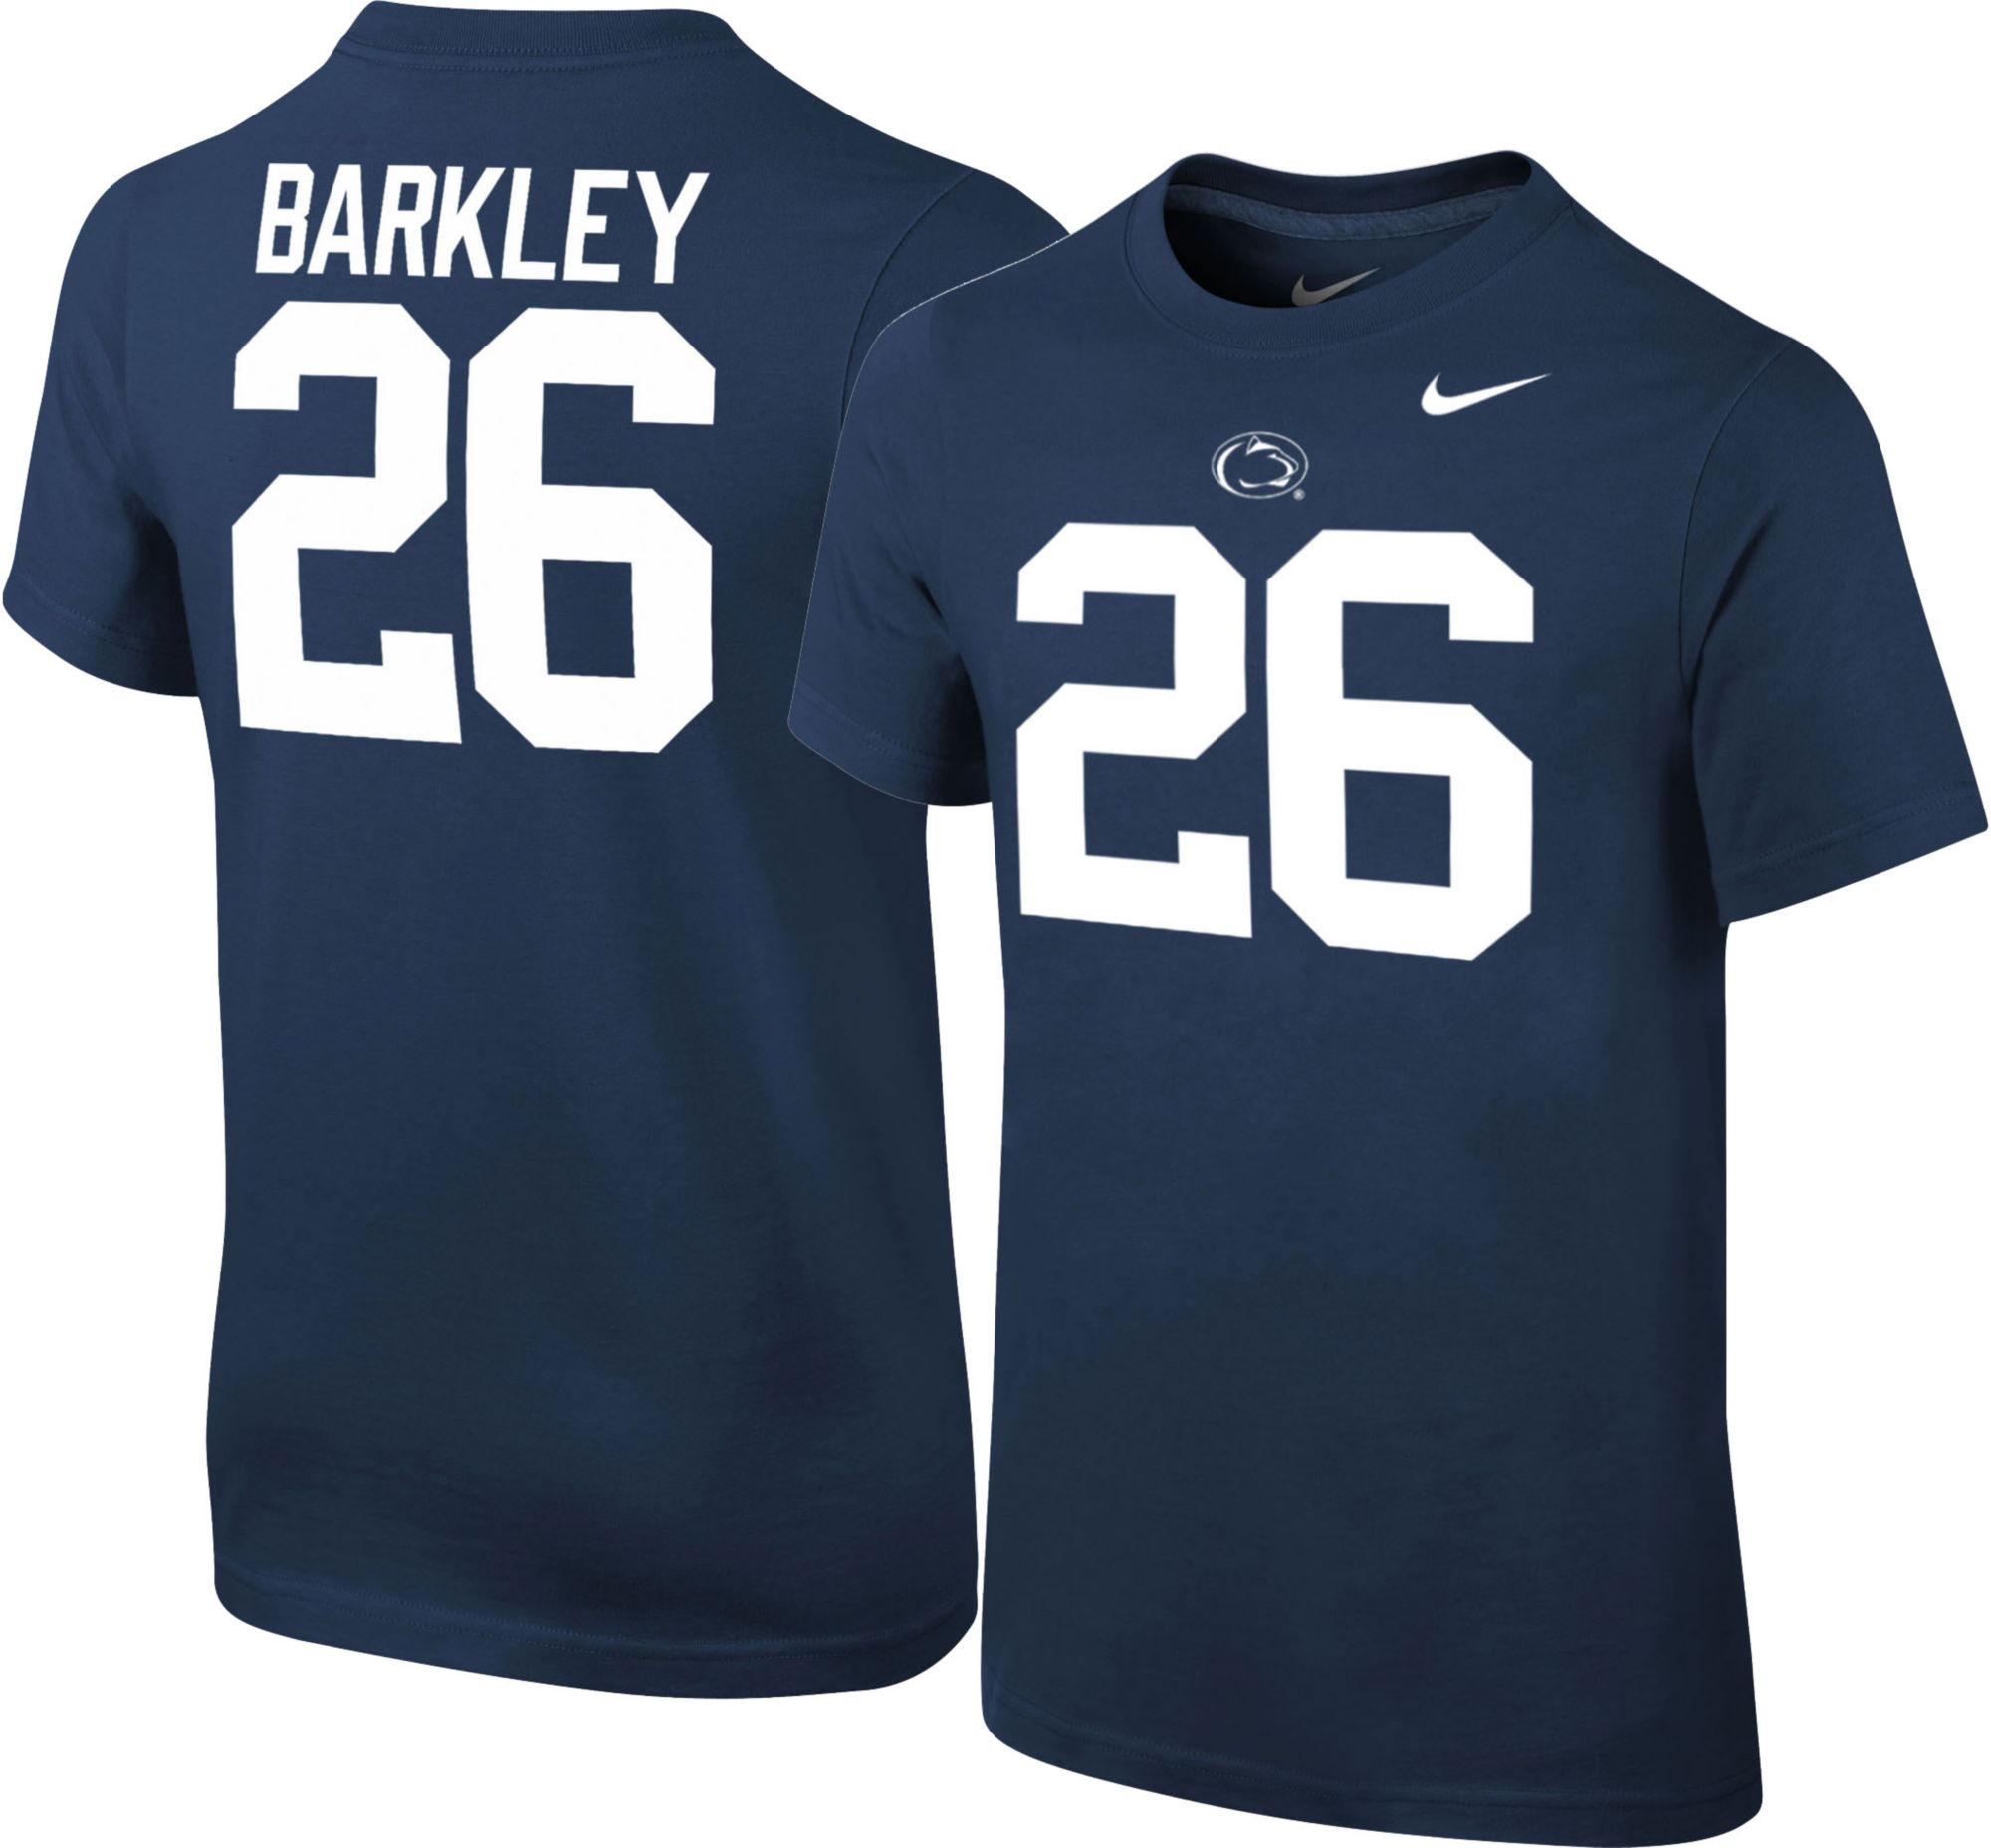 Nike Youth Saquon Barkley Penn State 